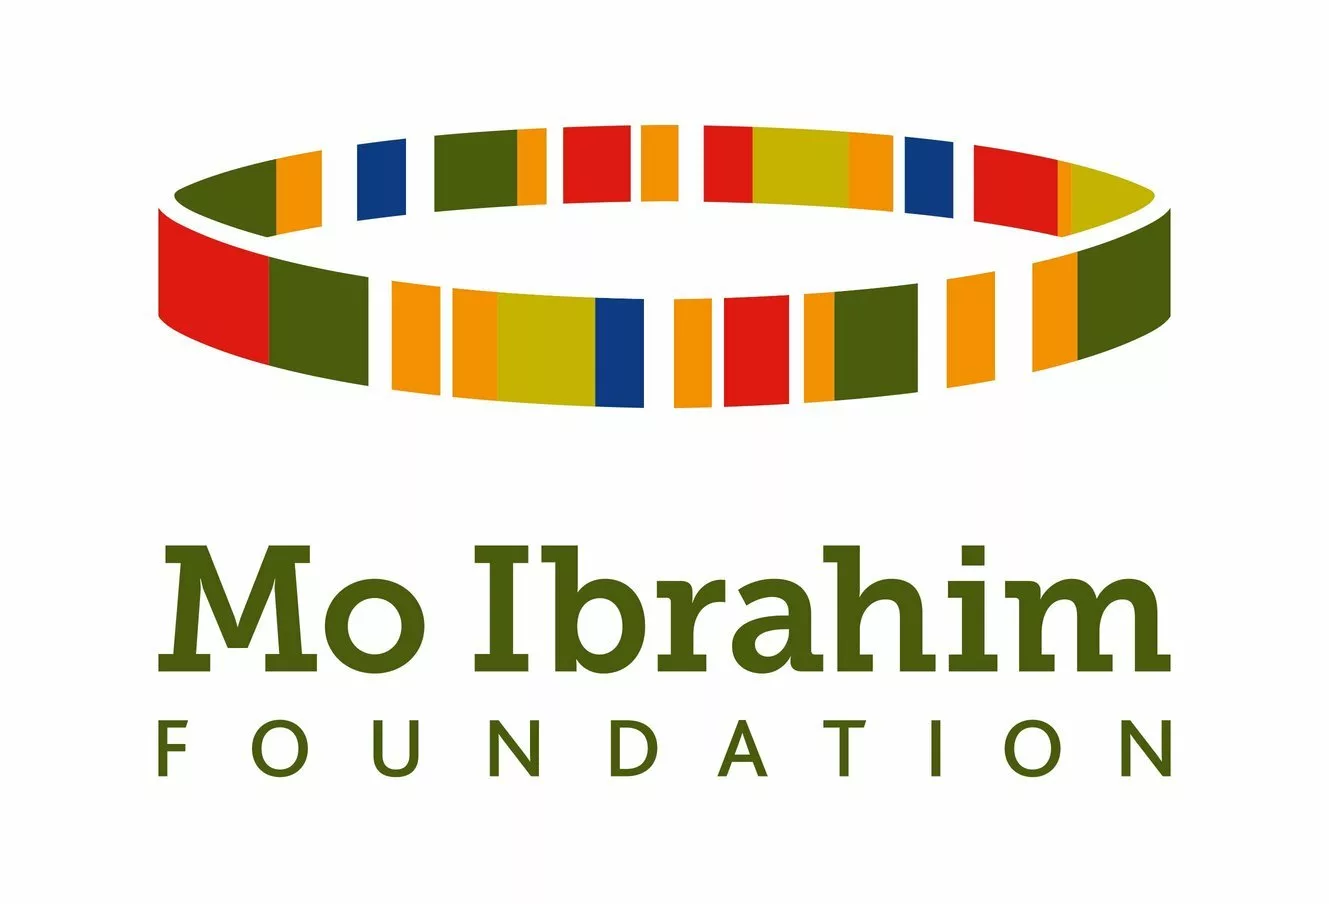 Mo Ibrahim Foundation Postgraduate Scholarship